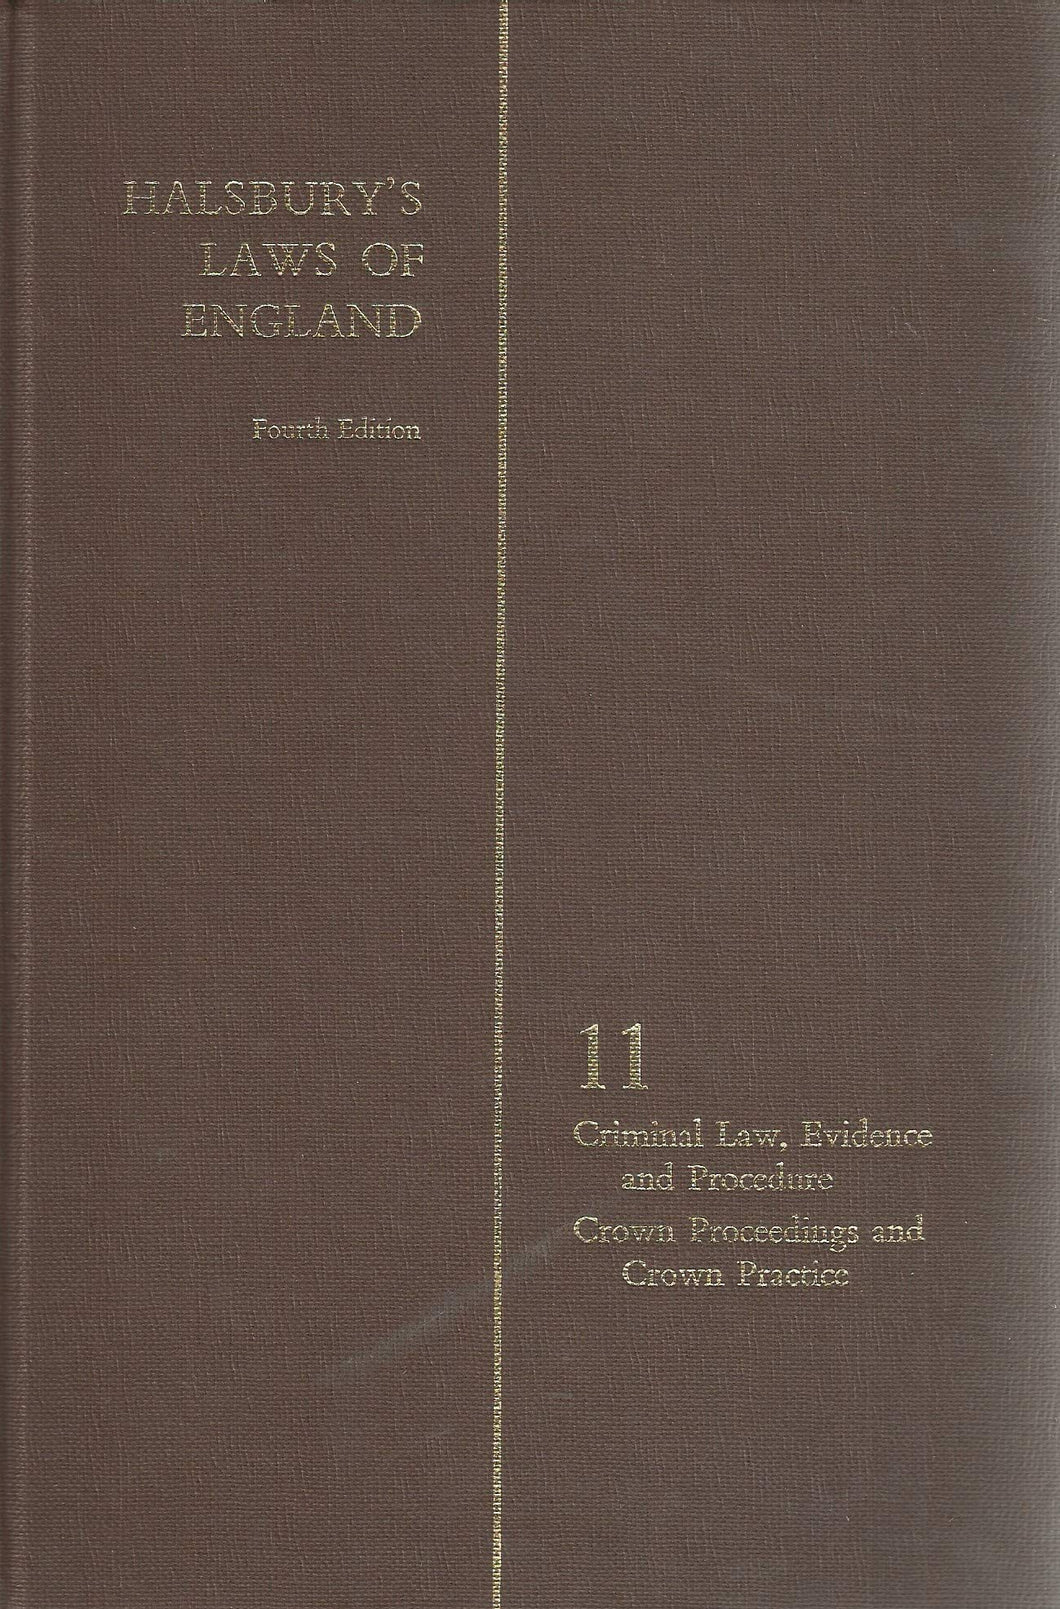 Halsbury's laws of England